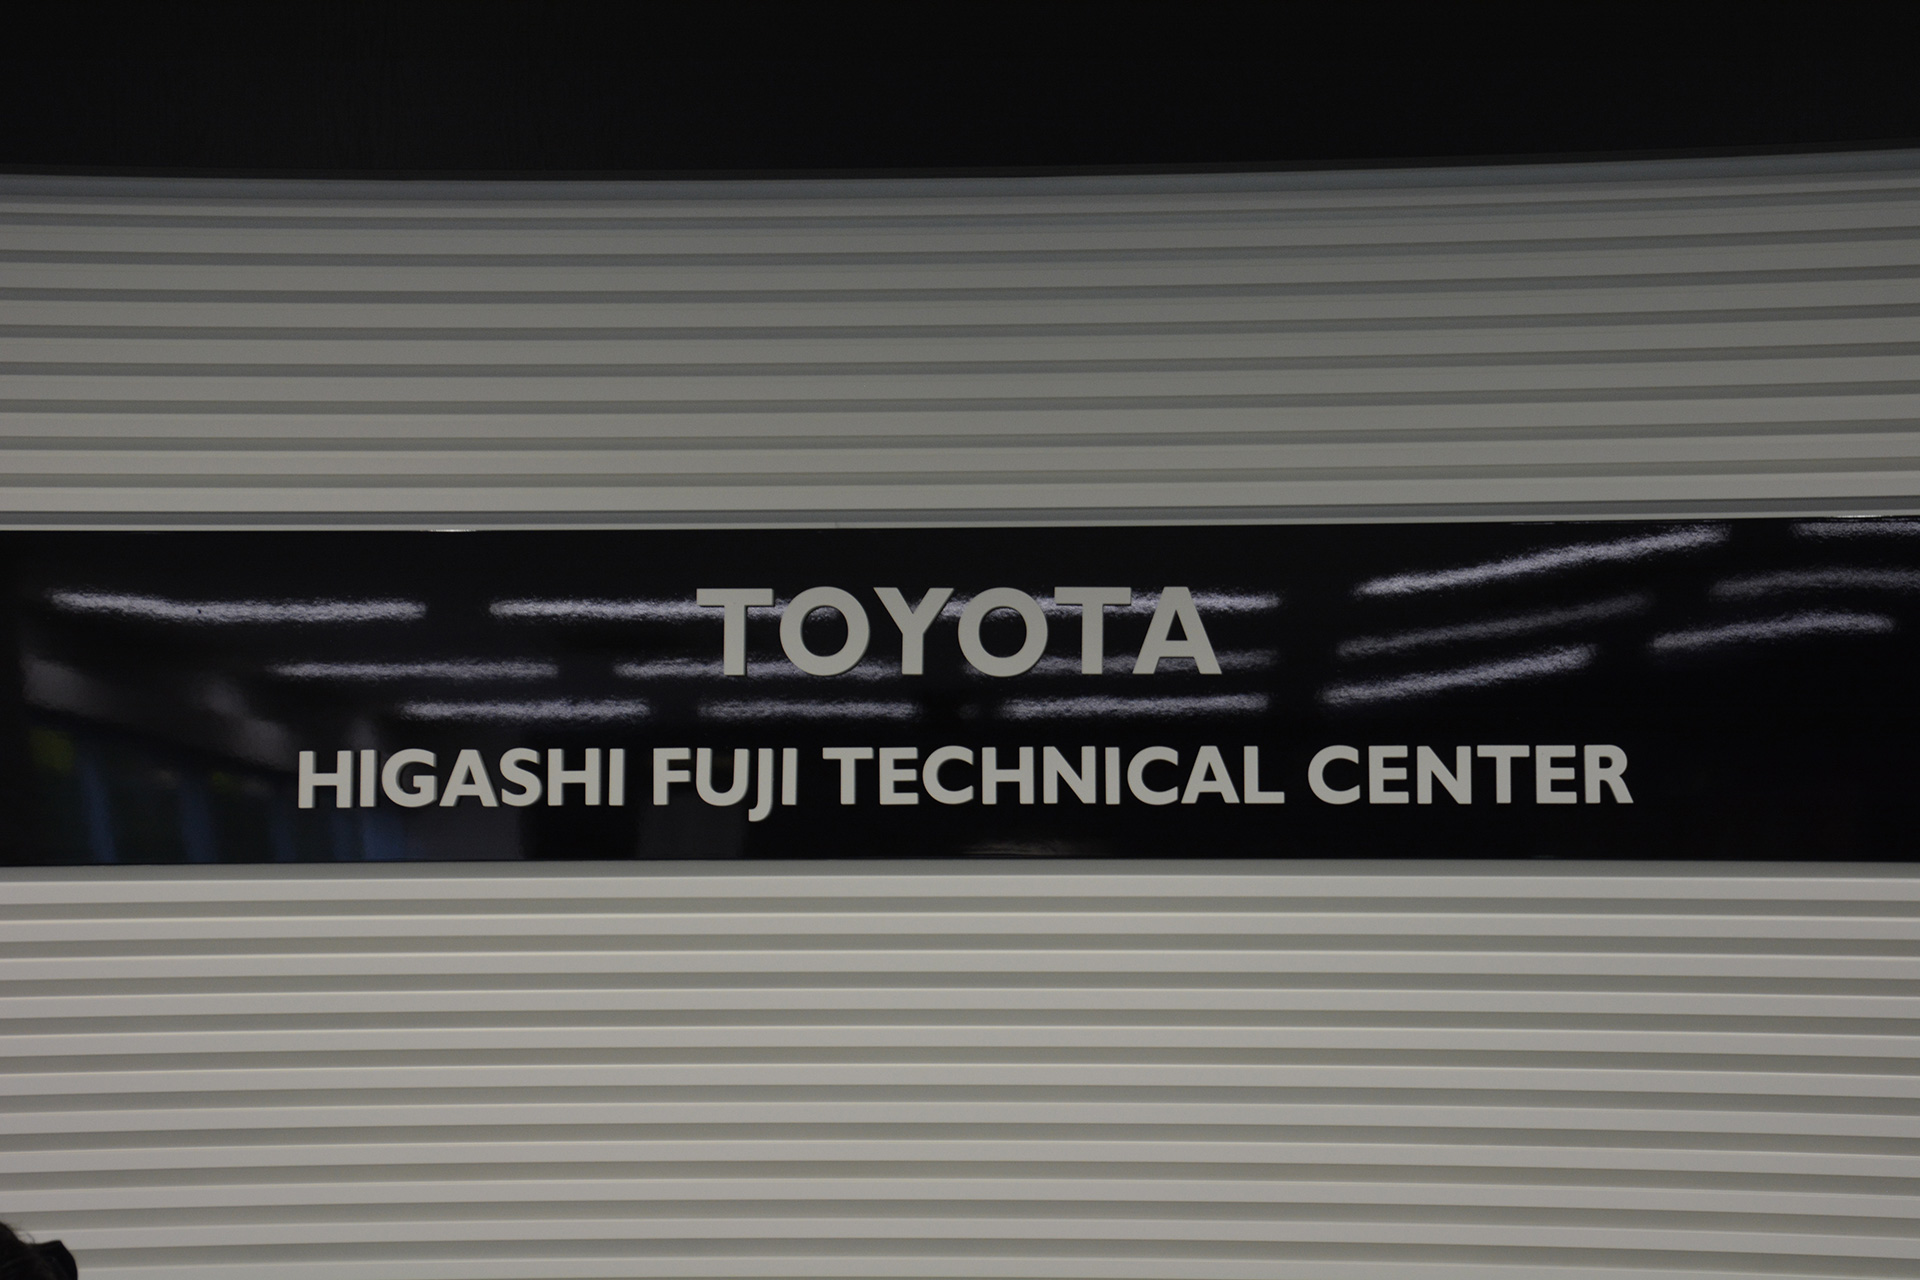 Higashifuji Technical Center